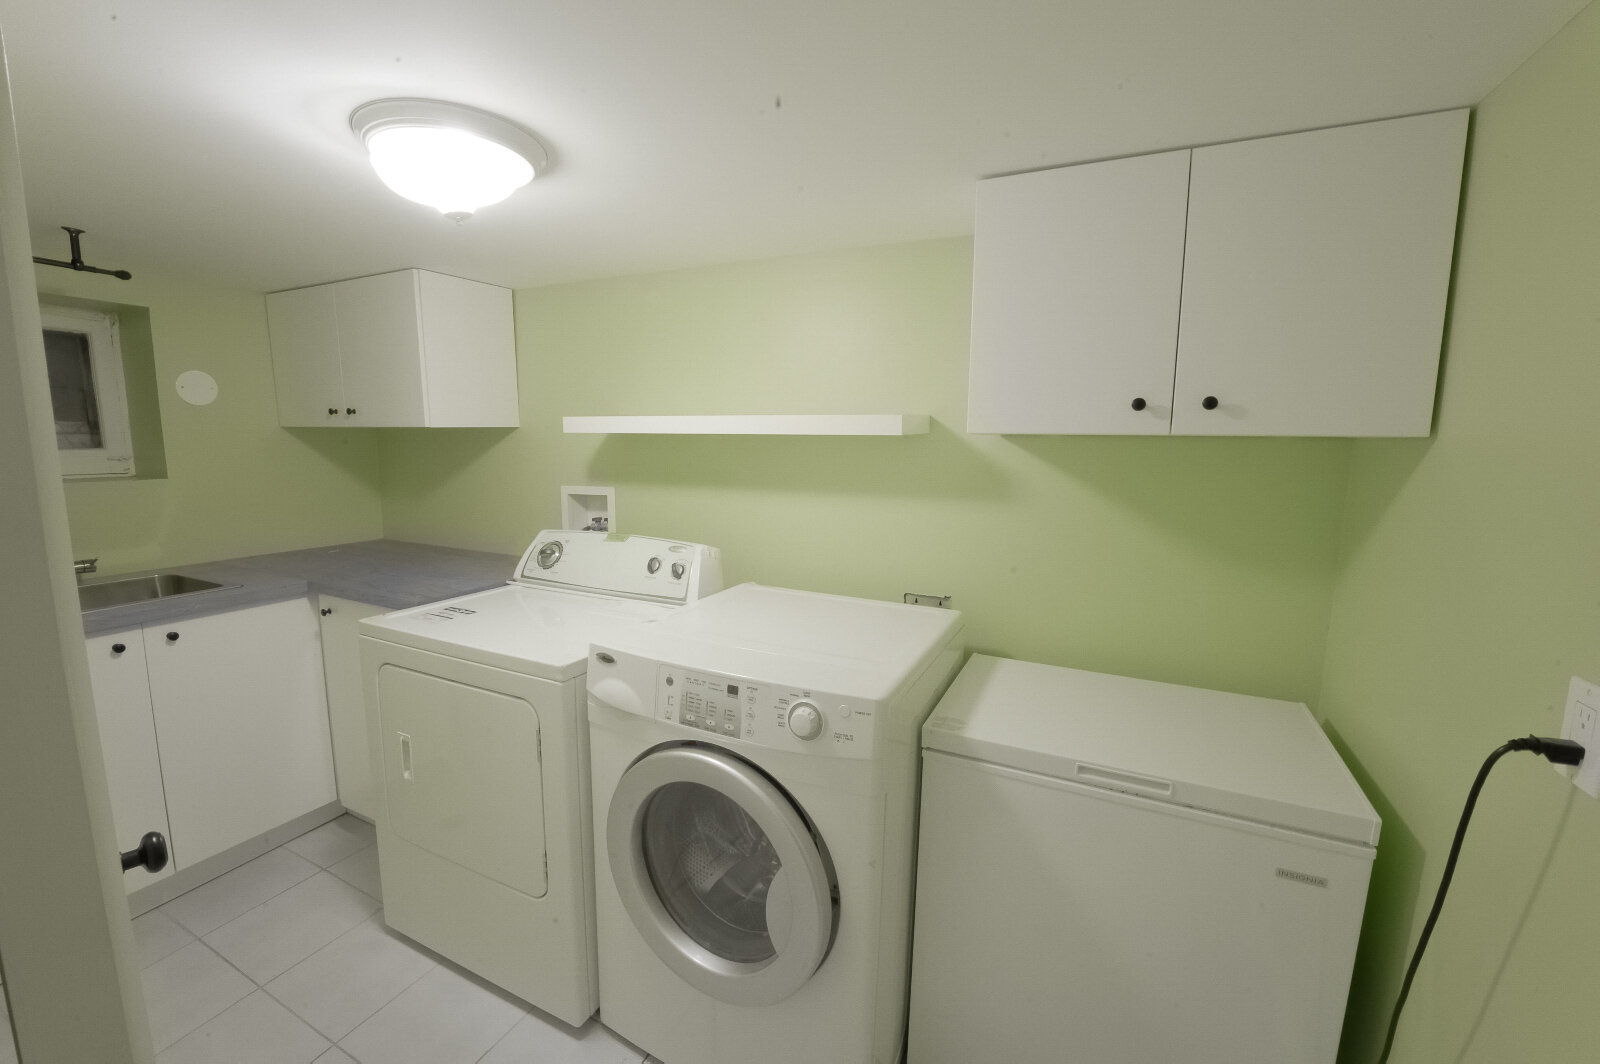 15 - Laundry Room (1).jpg